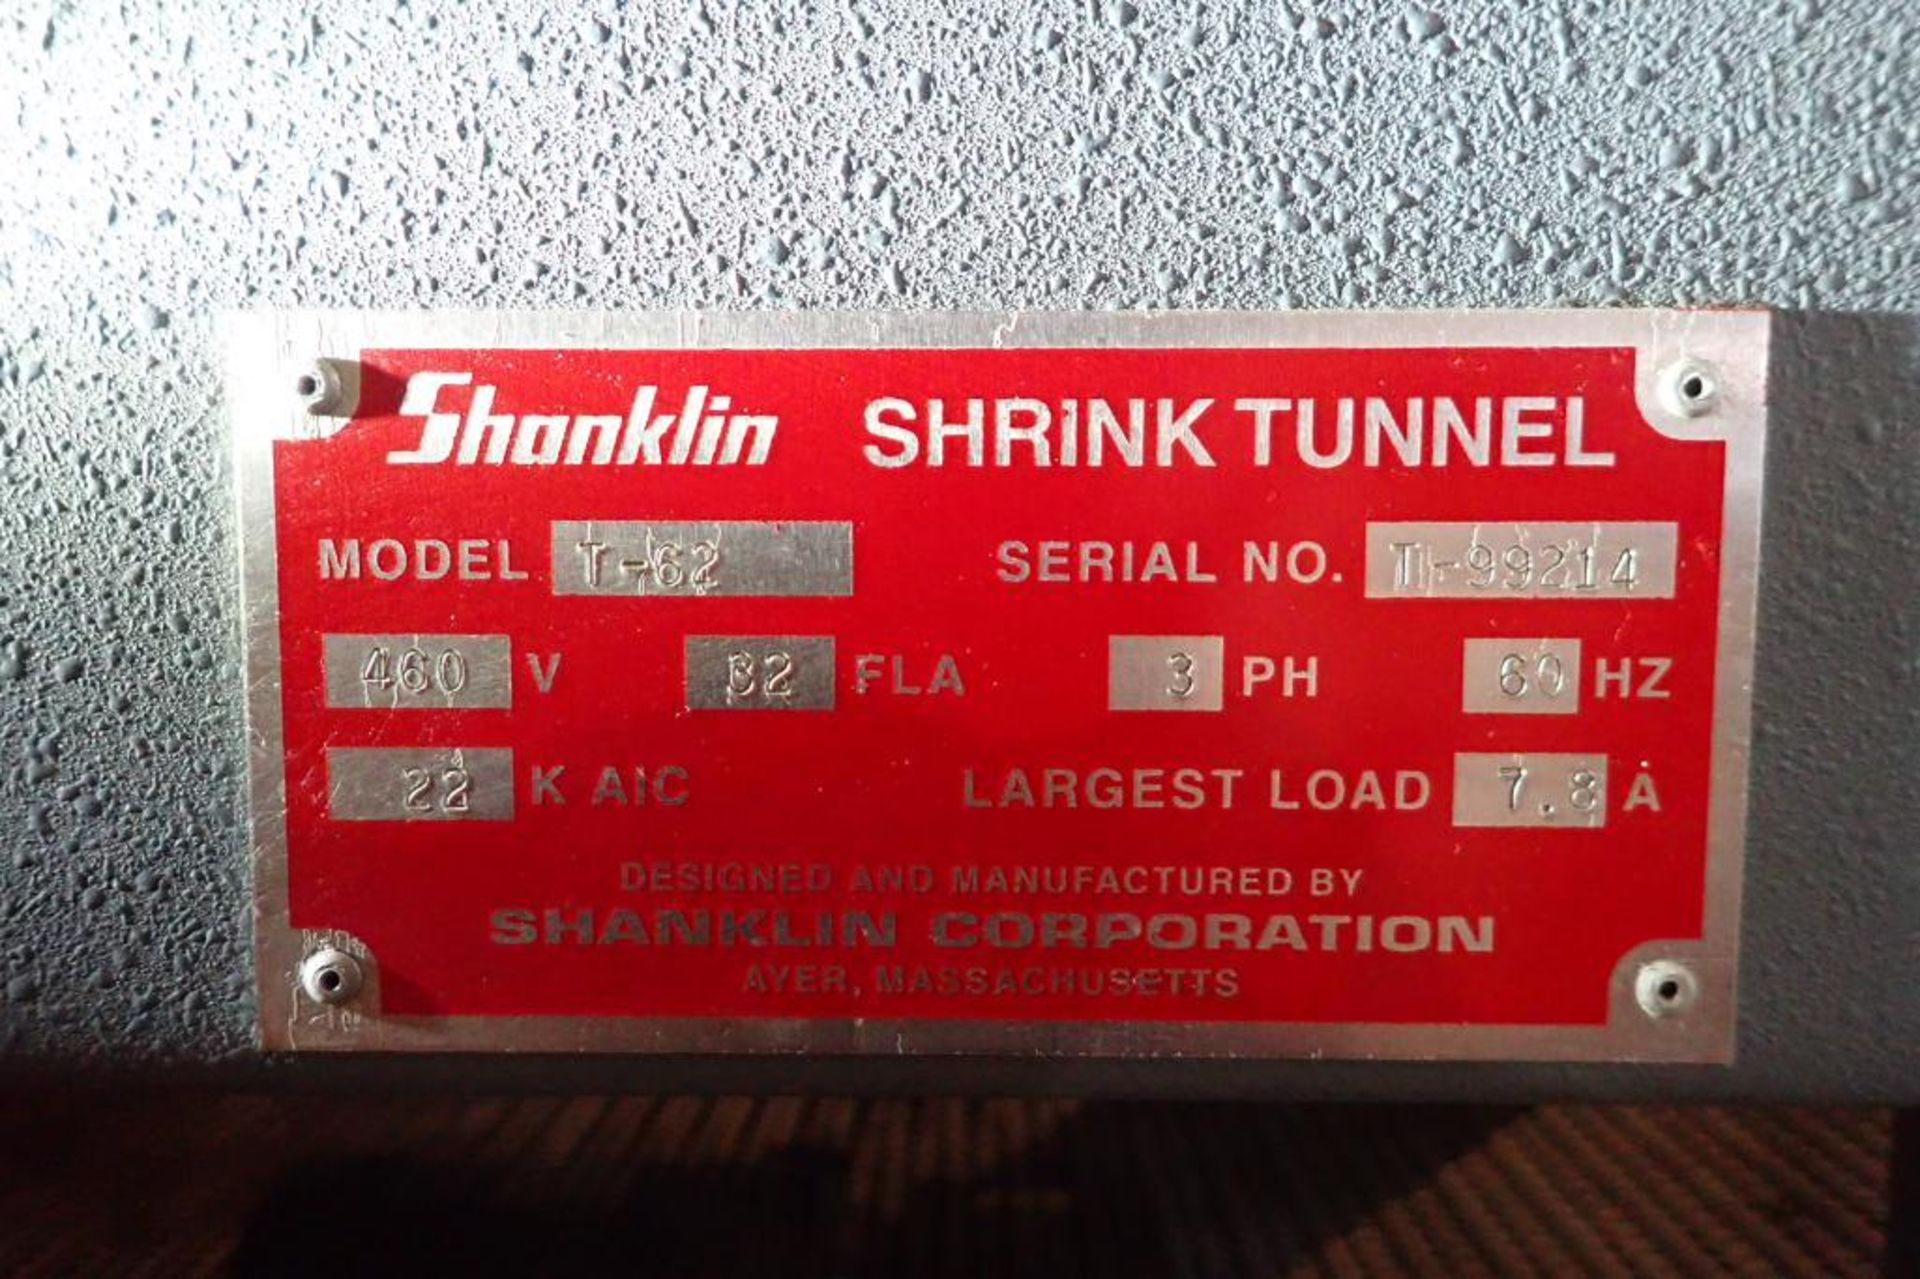 Shanklin heat shrink tunnel, Model T-62, SN T-99214, tunnel 61 in. long x 19 in. wide x 10 in. tall, - Image 13 of 13